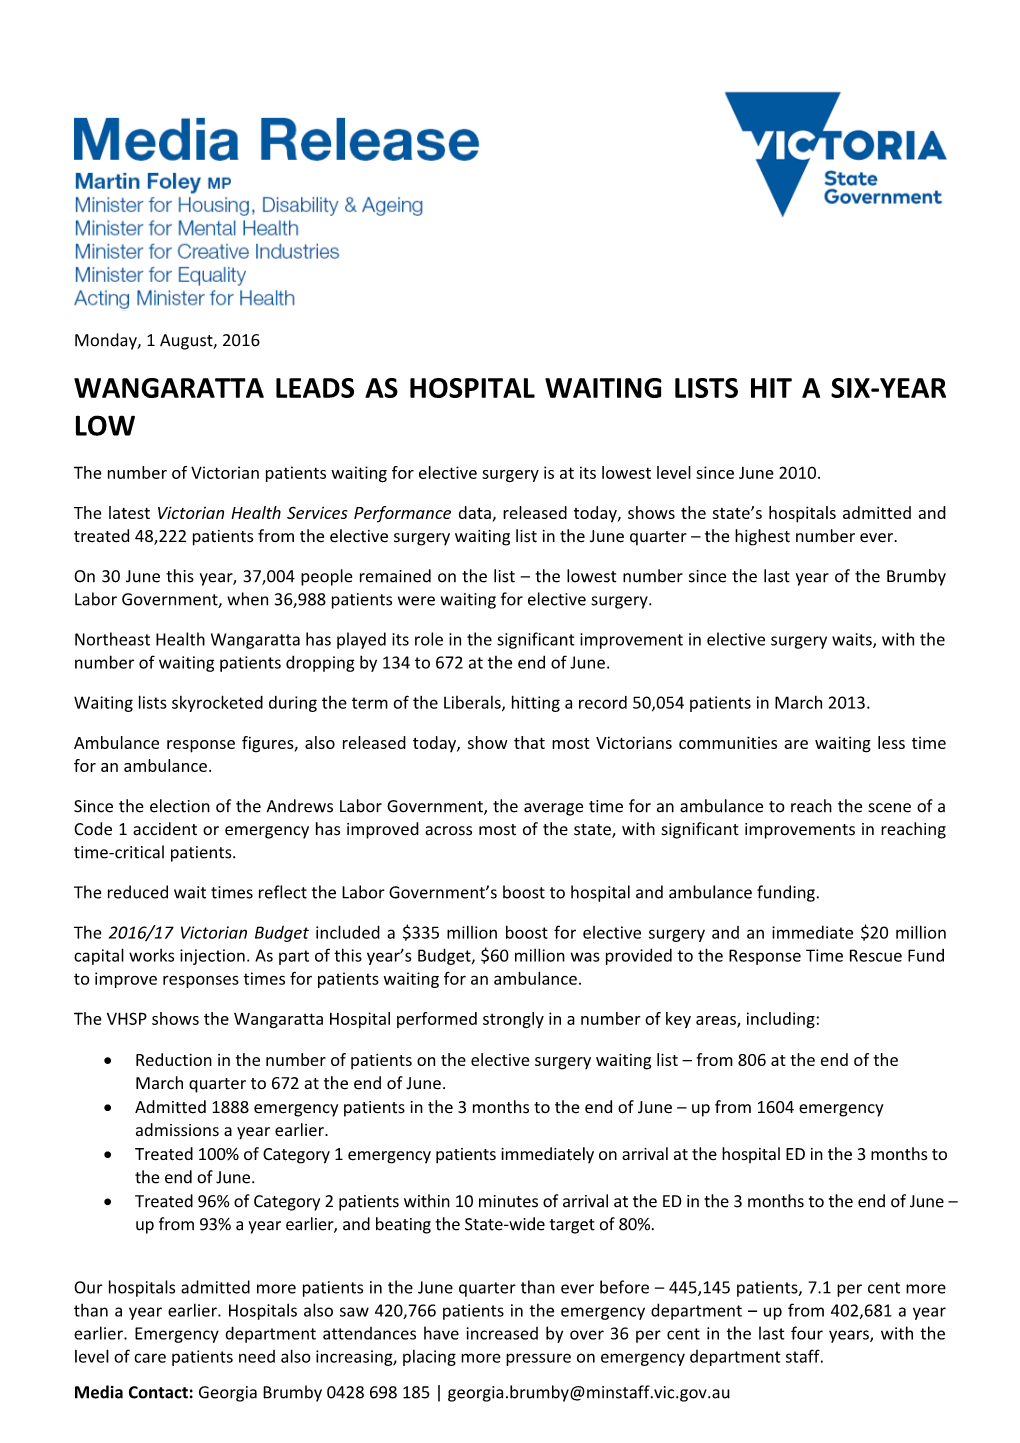 Wangaratta Leads As Hospital Waiting Lists Hit a Six-Year Low